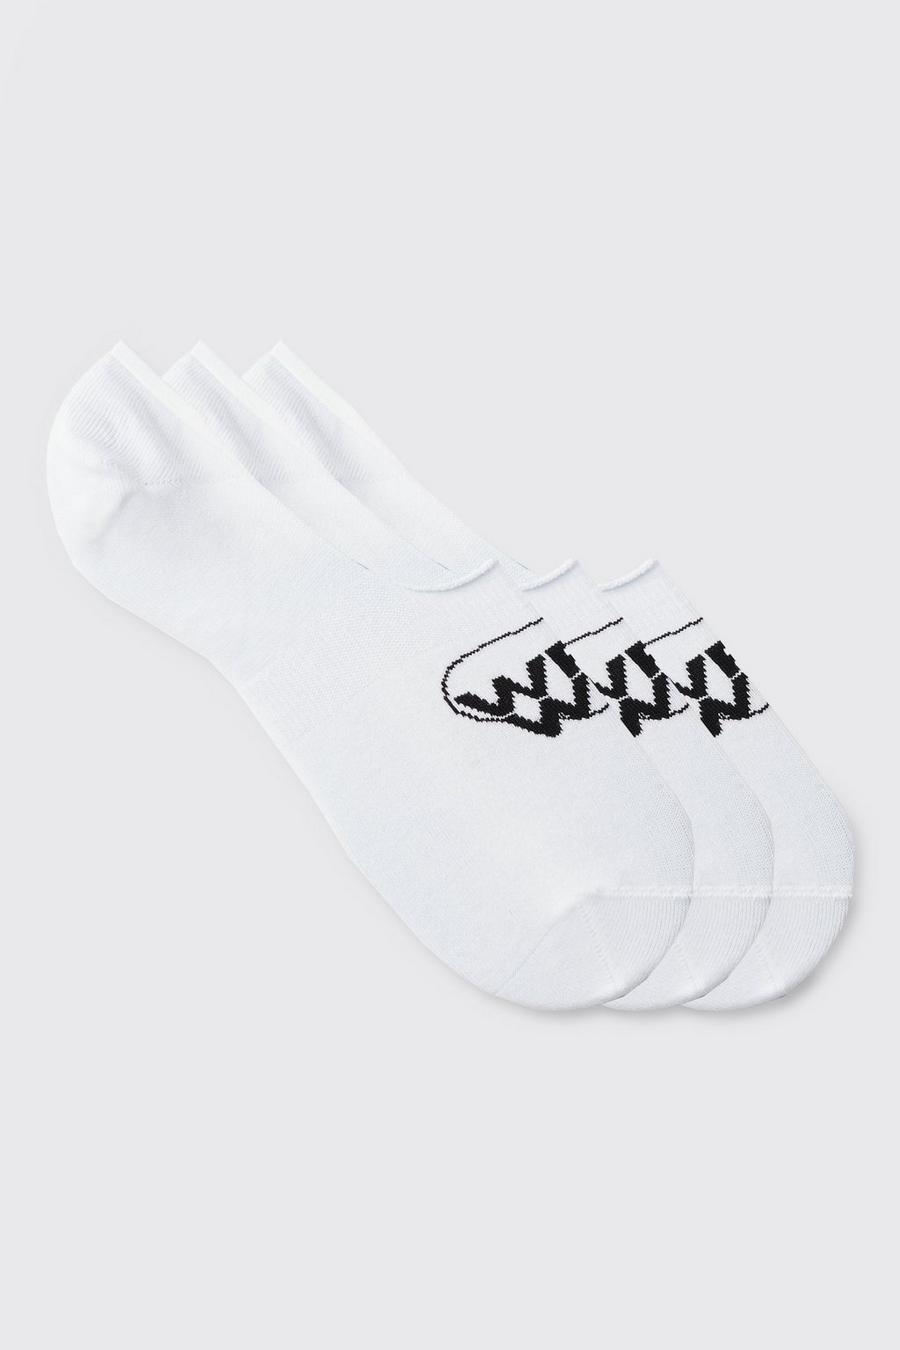 Pack de 3 pares de calcetines invisibles con logo Worldwide, White image number 1